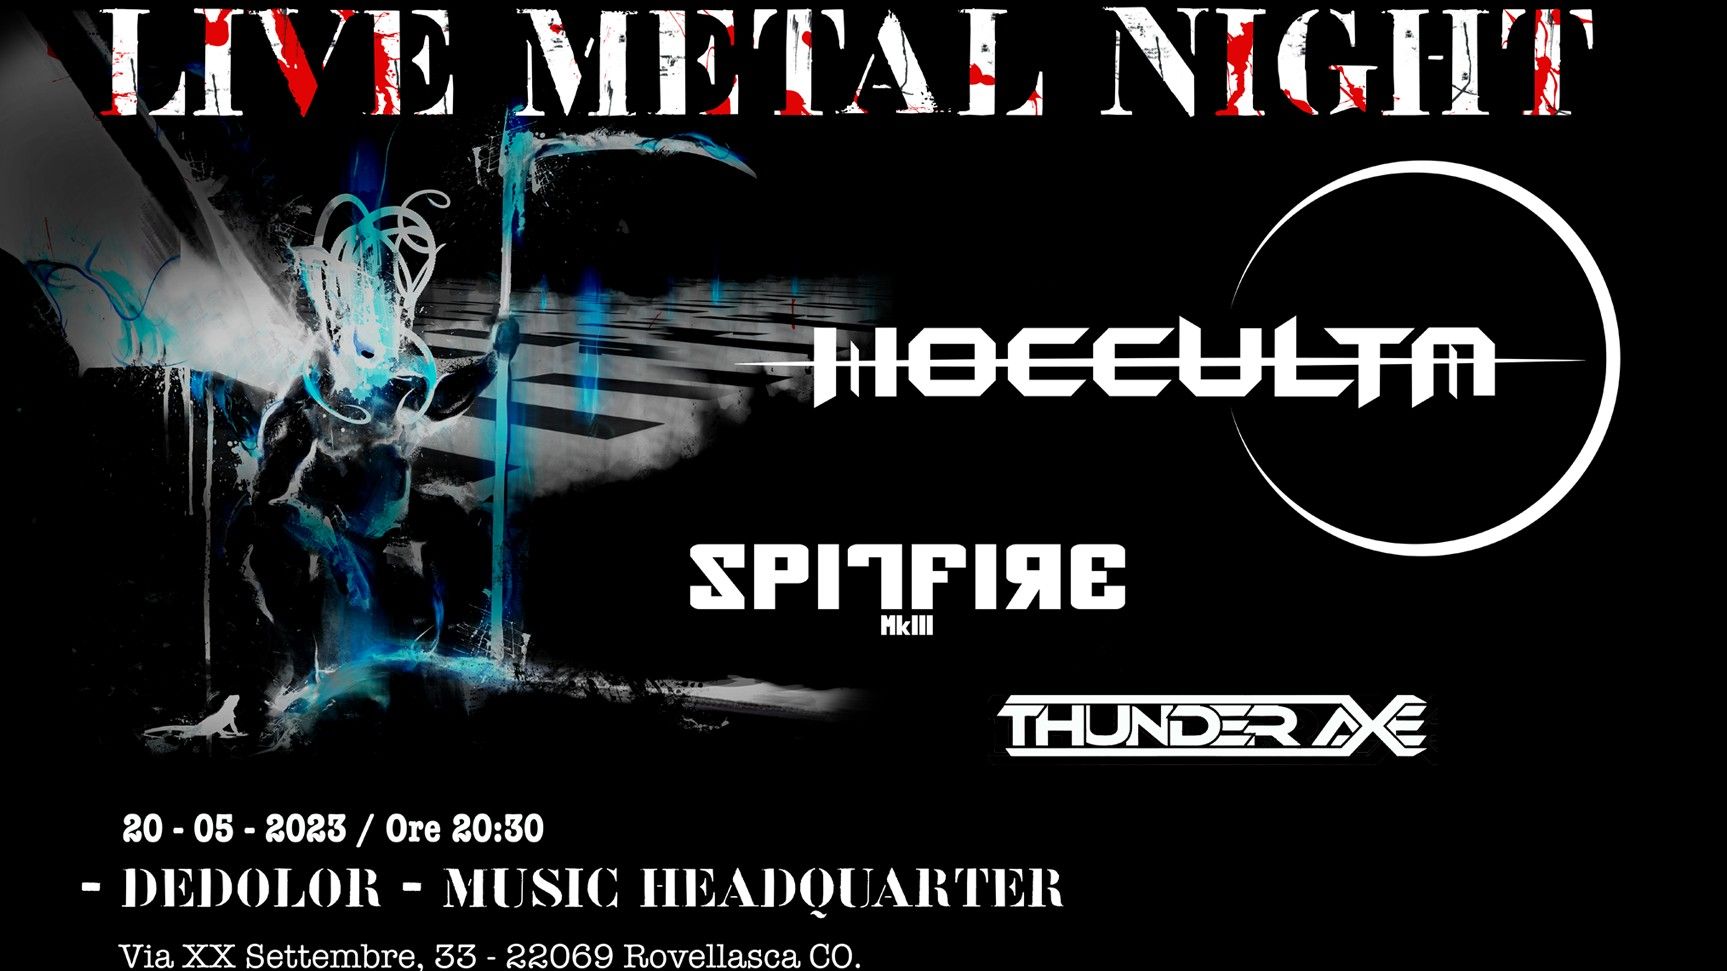 Live Metal Night Hocculta+Spitfire+Thunder Axe